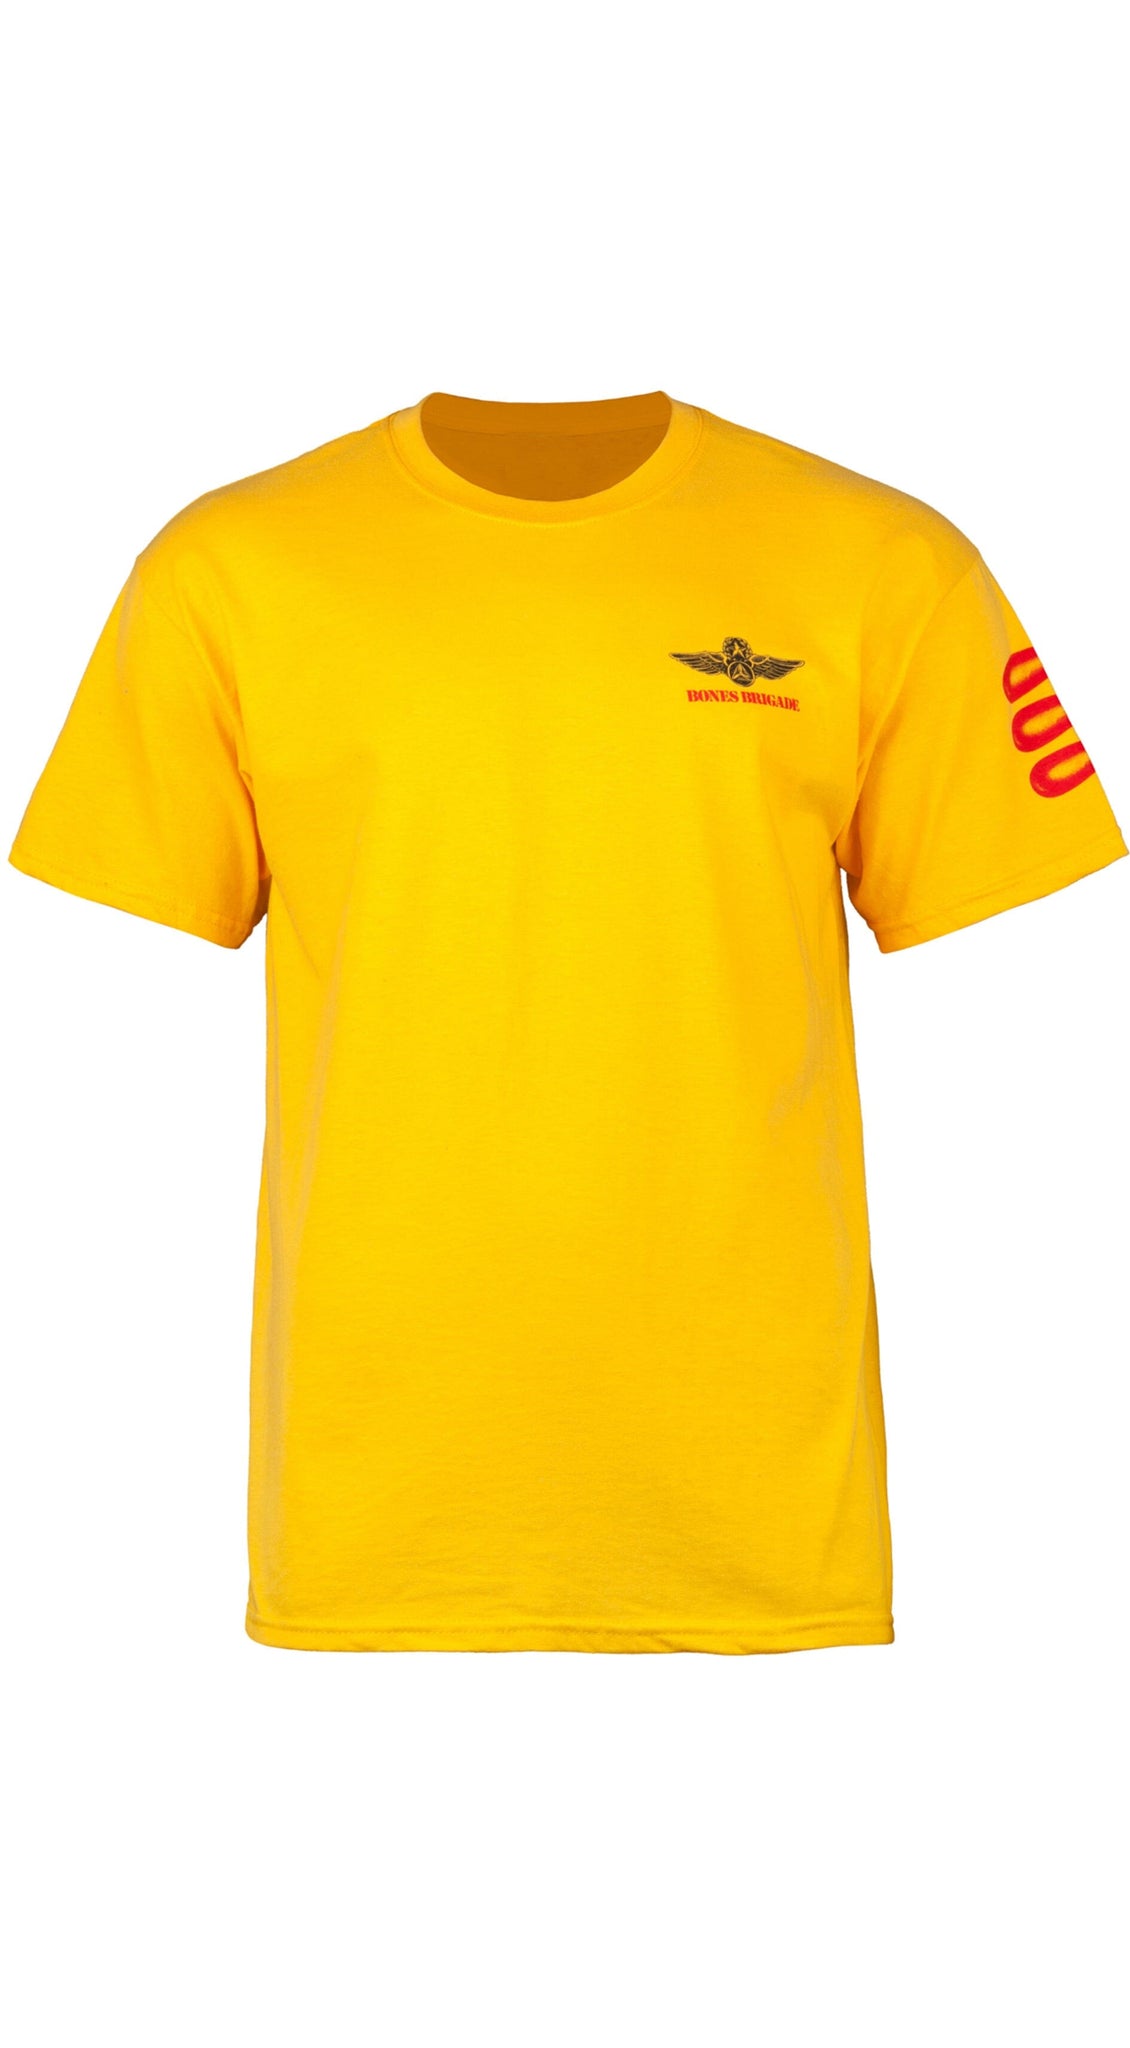 Powell Peralta Bones Brigade Bomber Yellow T-shirt PREORDER- Camiseta Ropa Powell Peralta 